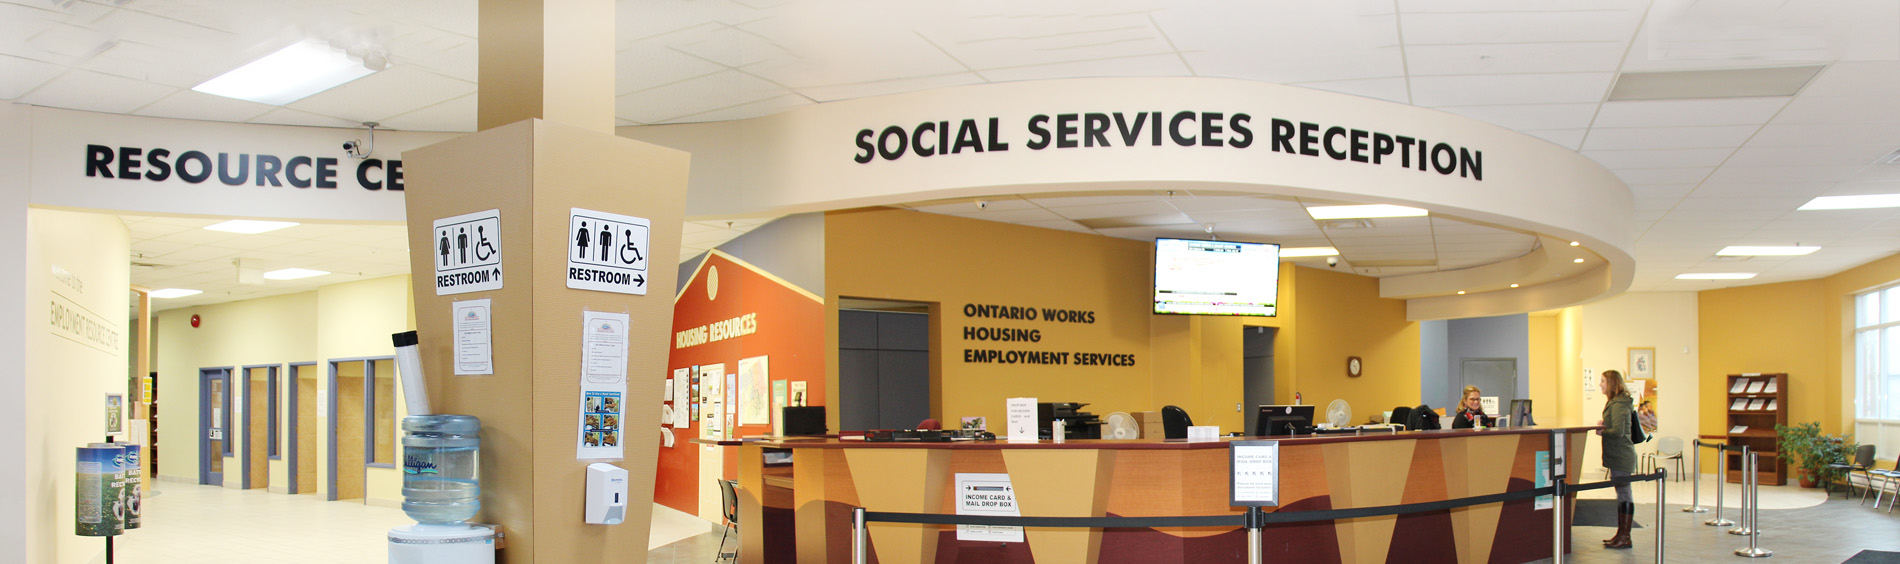 Social Services main reception